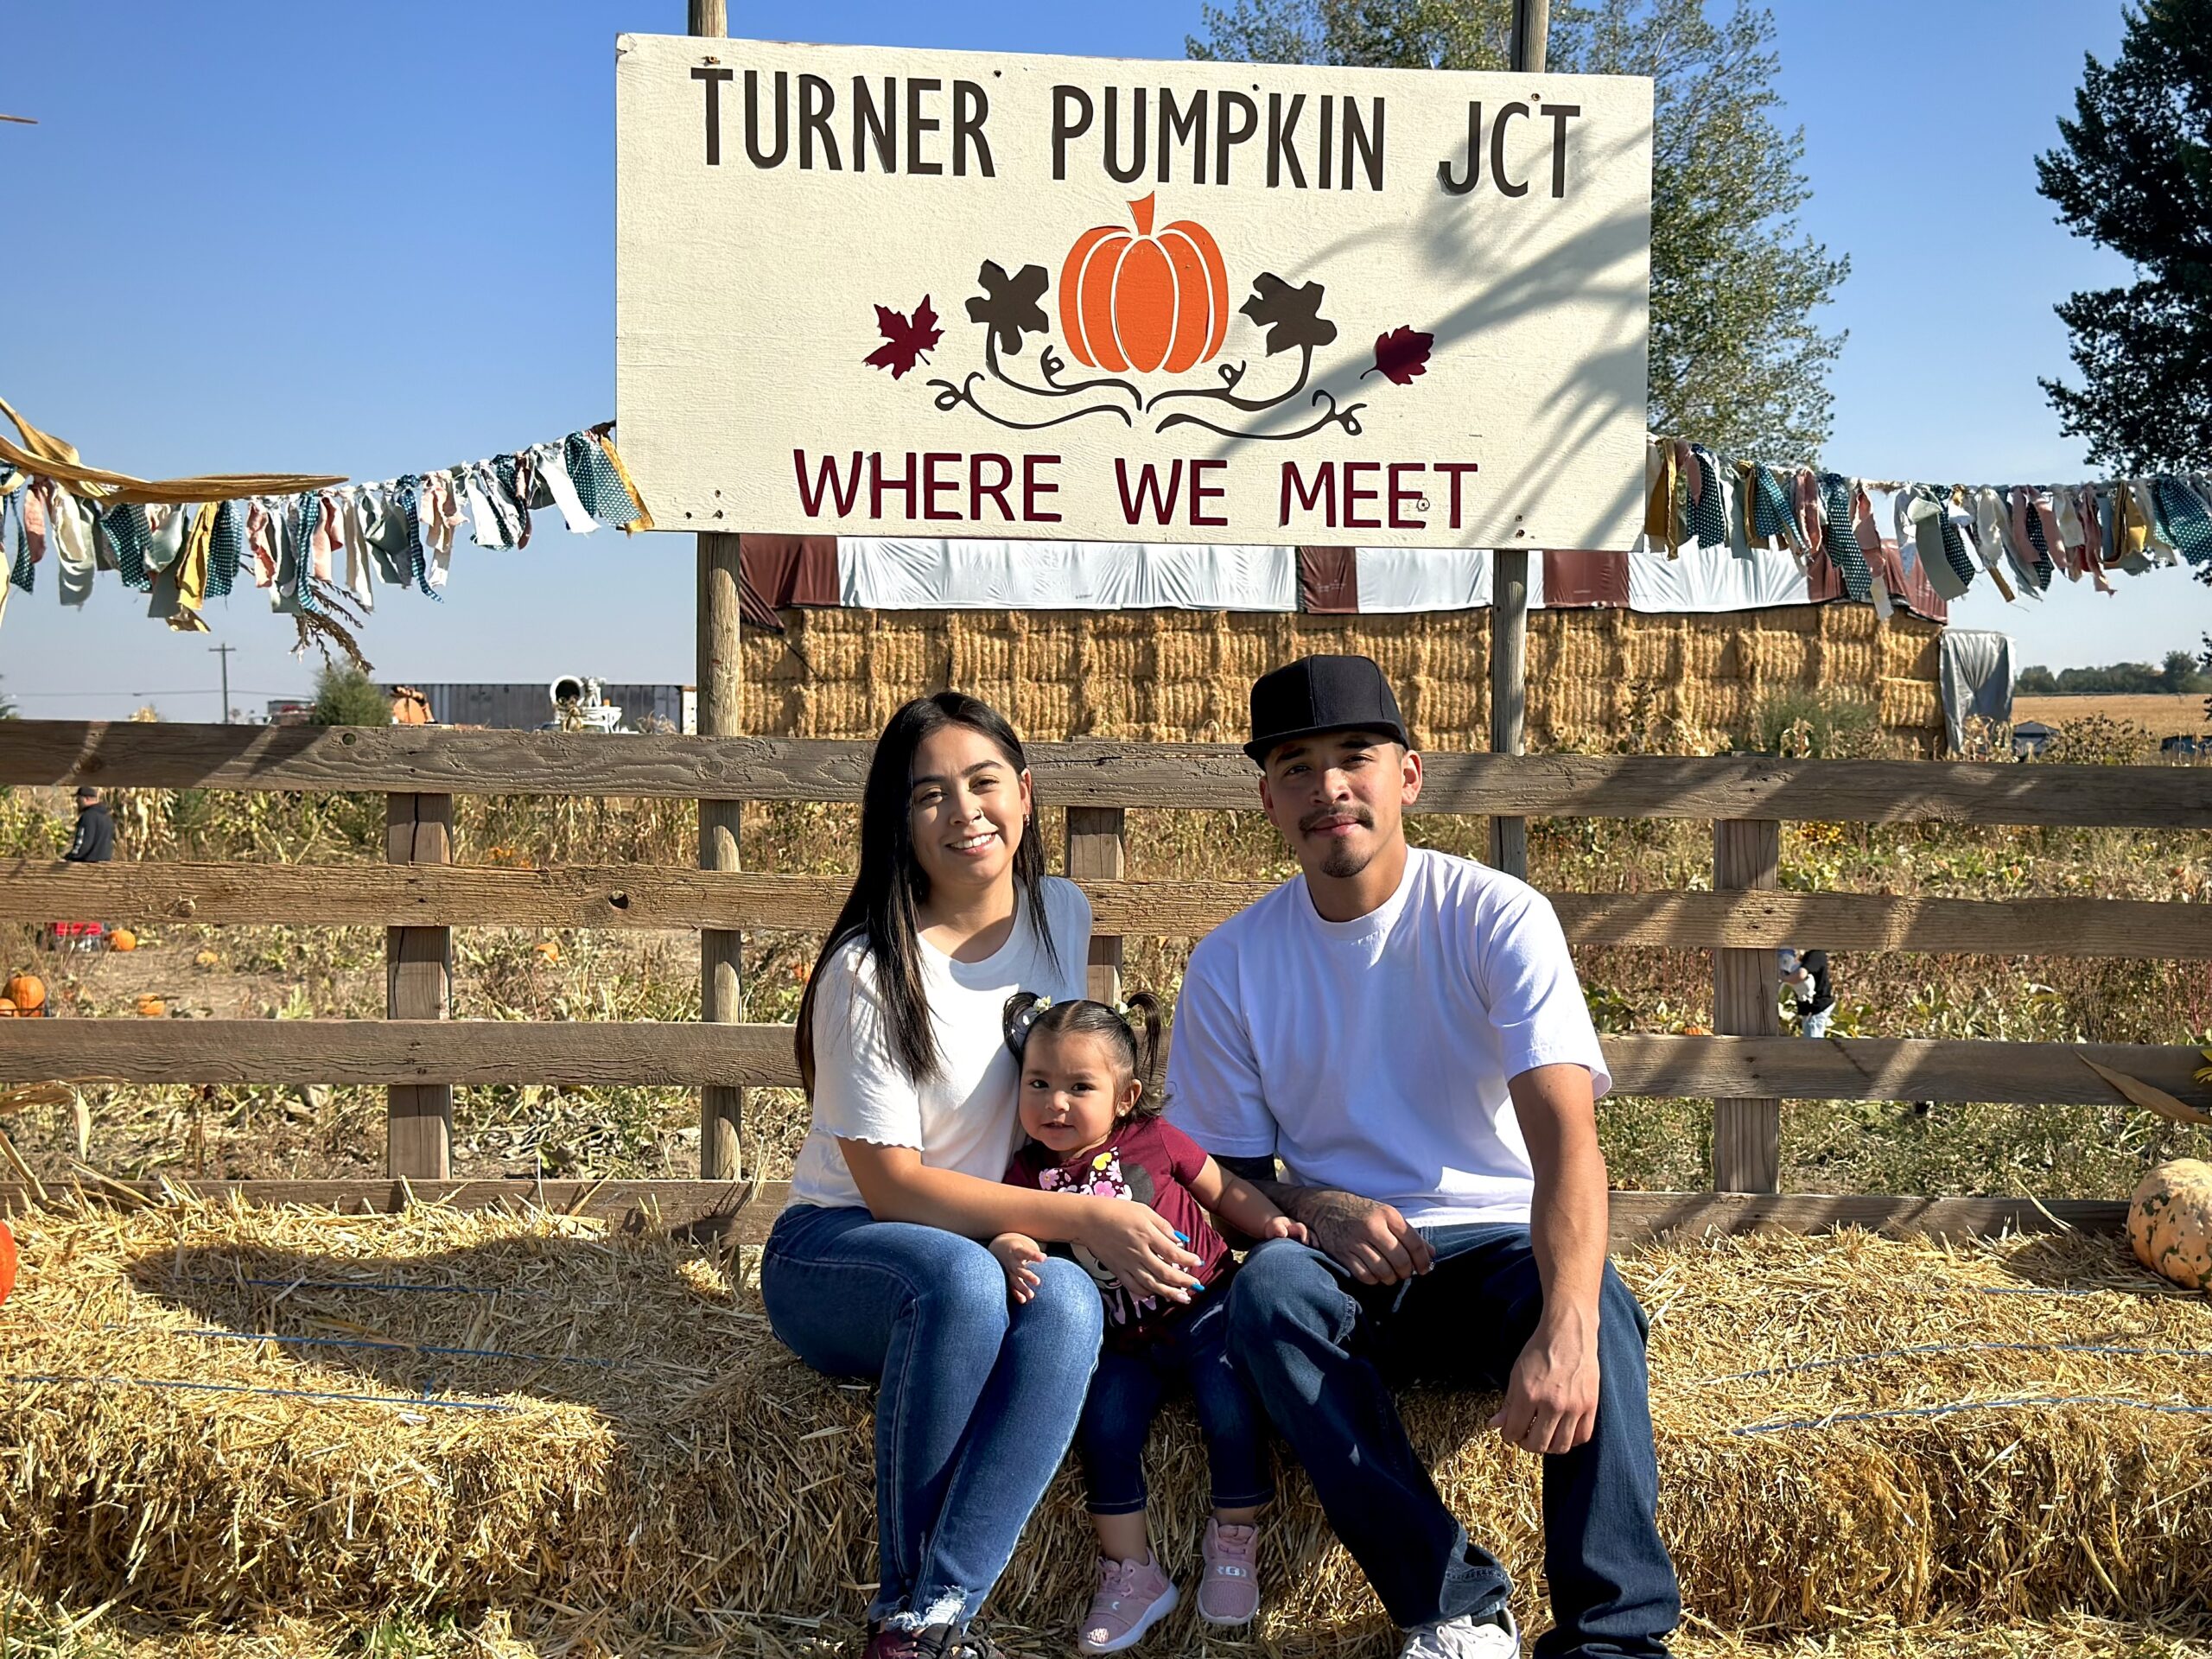 Turner pumpkin junction -110